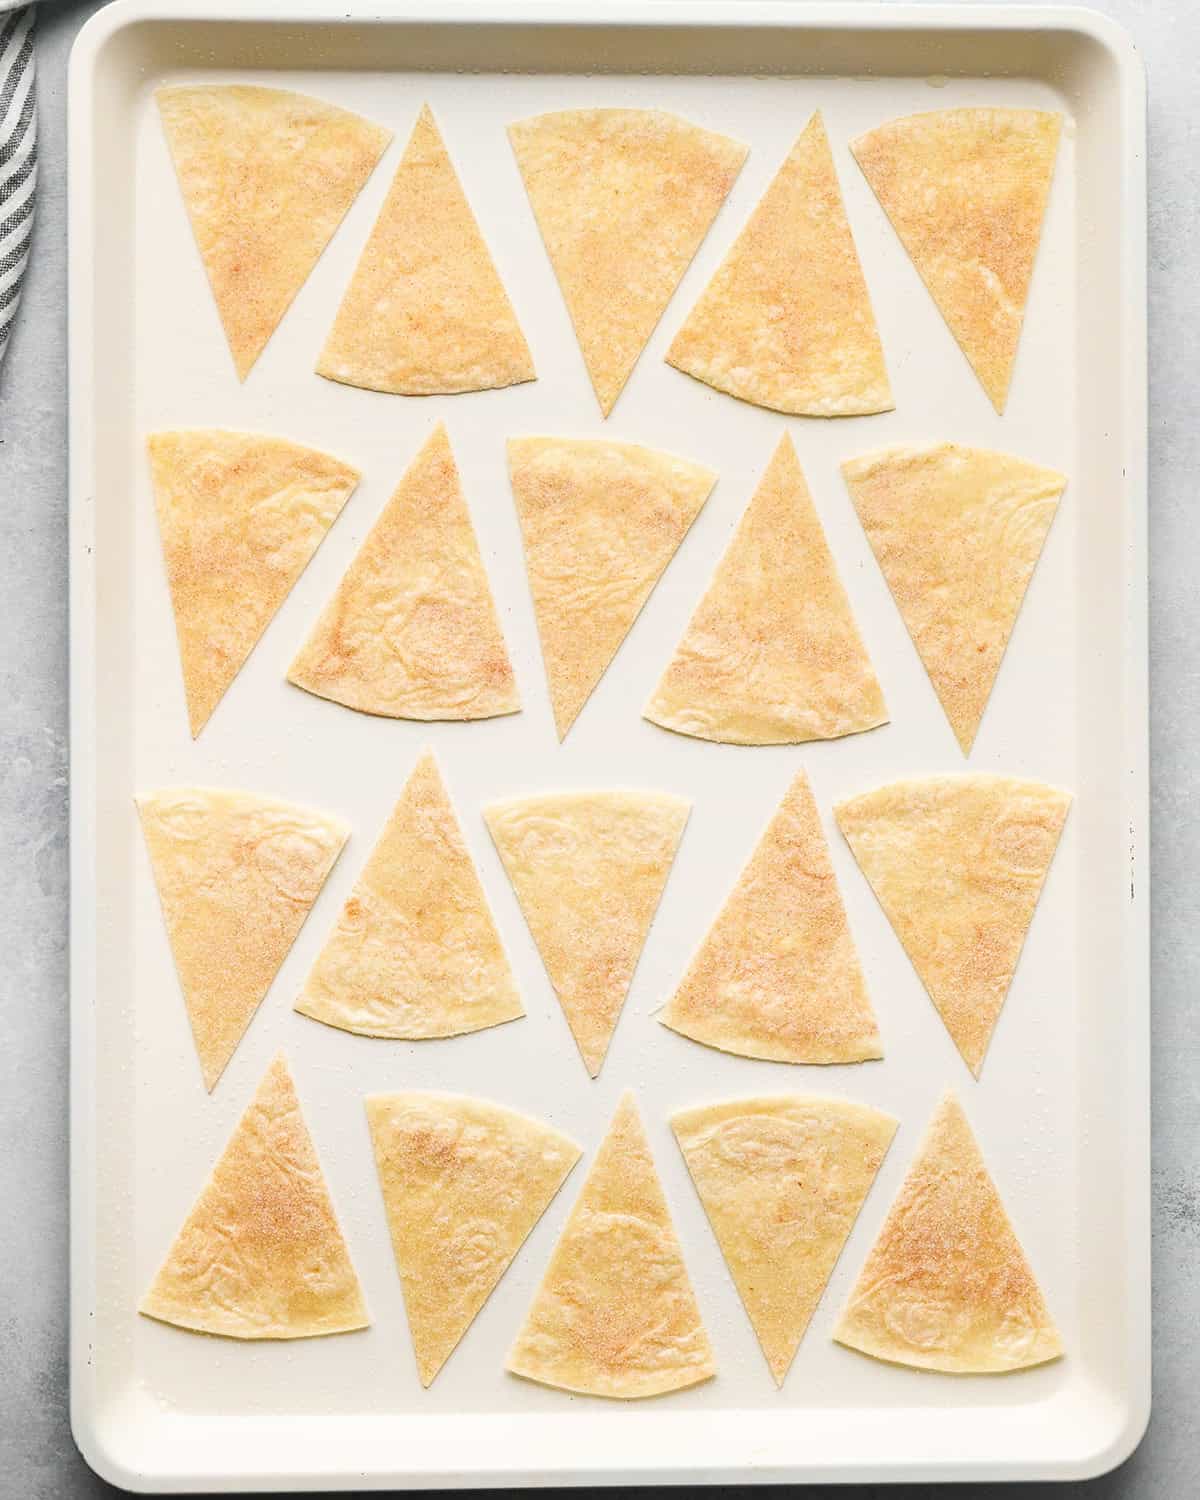 16 cinnamon tortilla chips on a baking pan before making